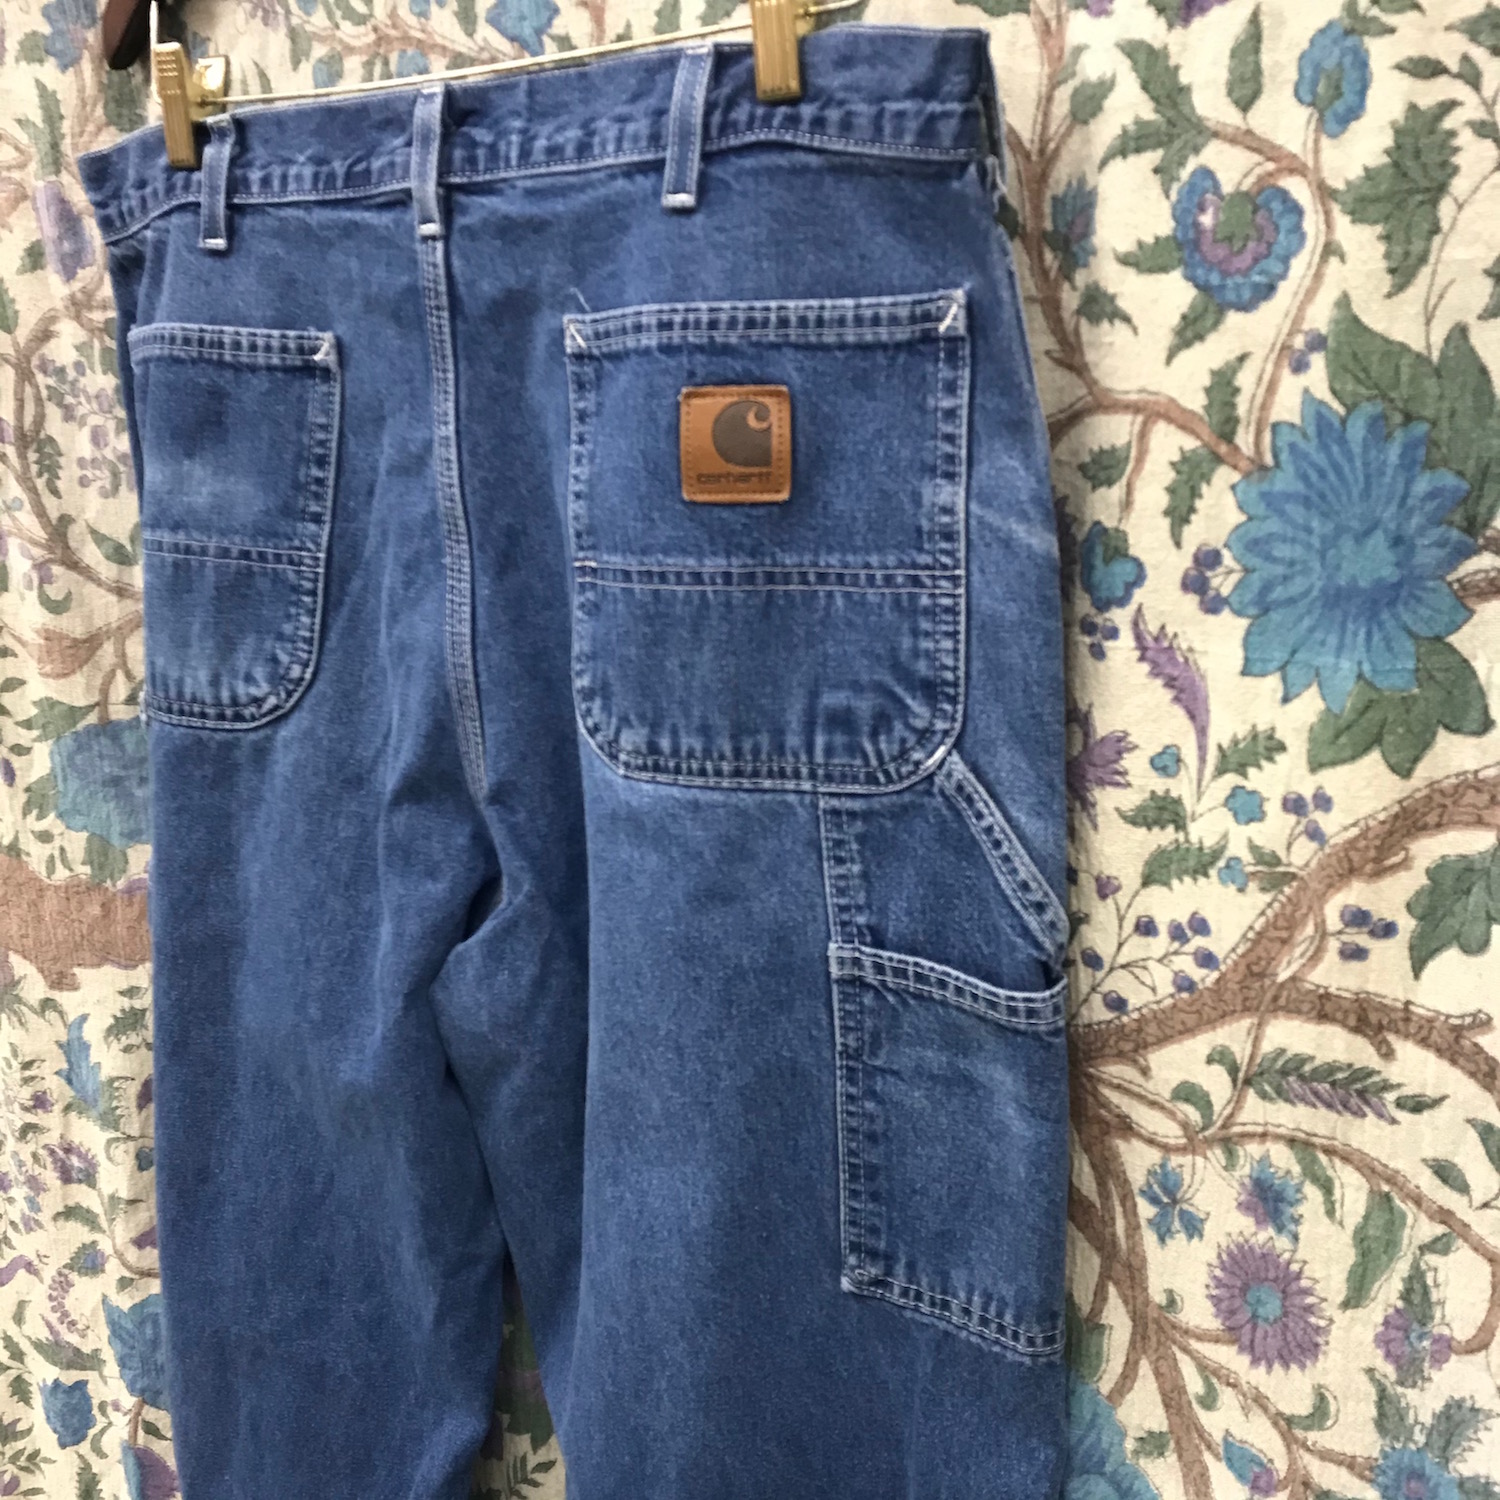 Carhart Carpenter Jeans - Tucson Thrift Shop